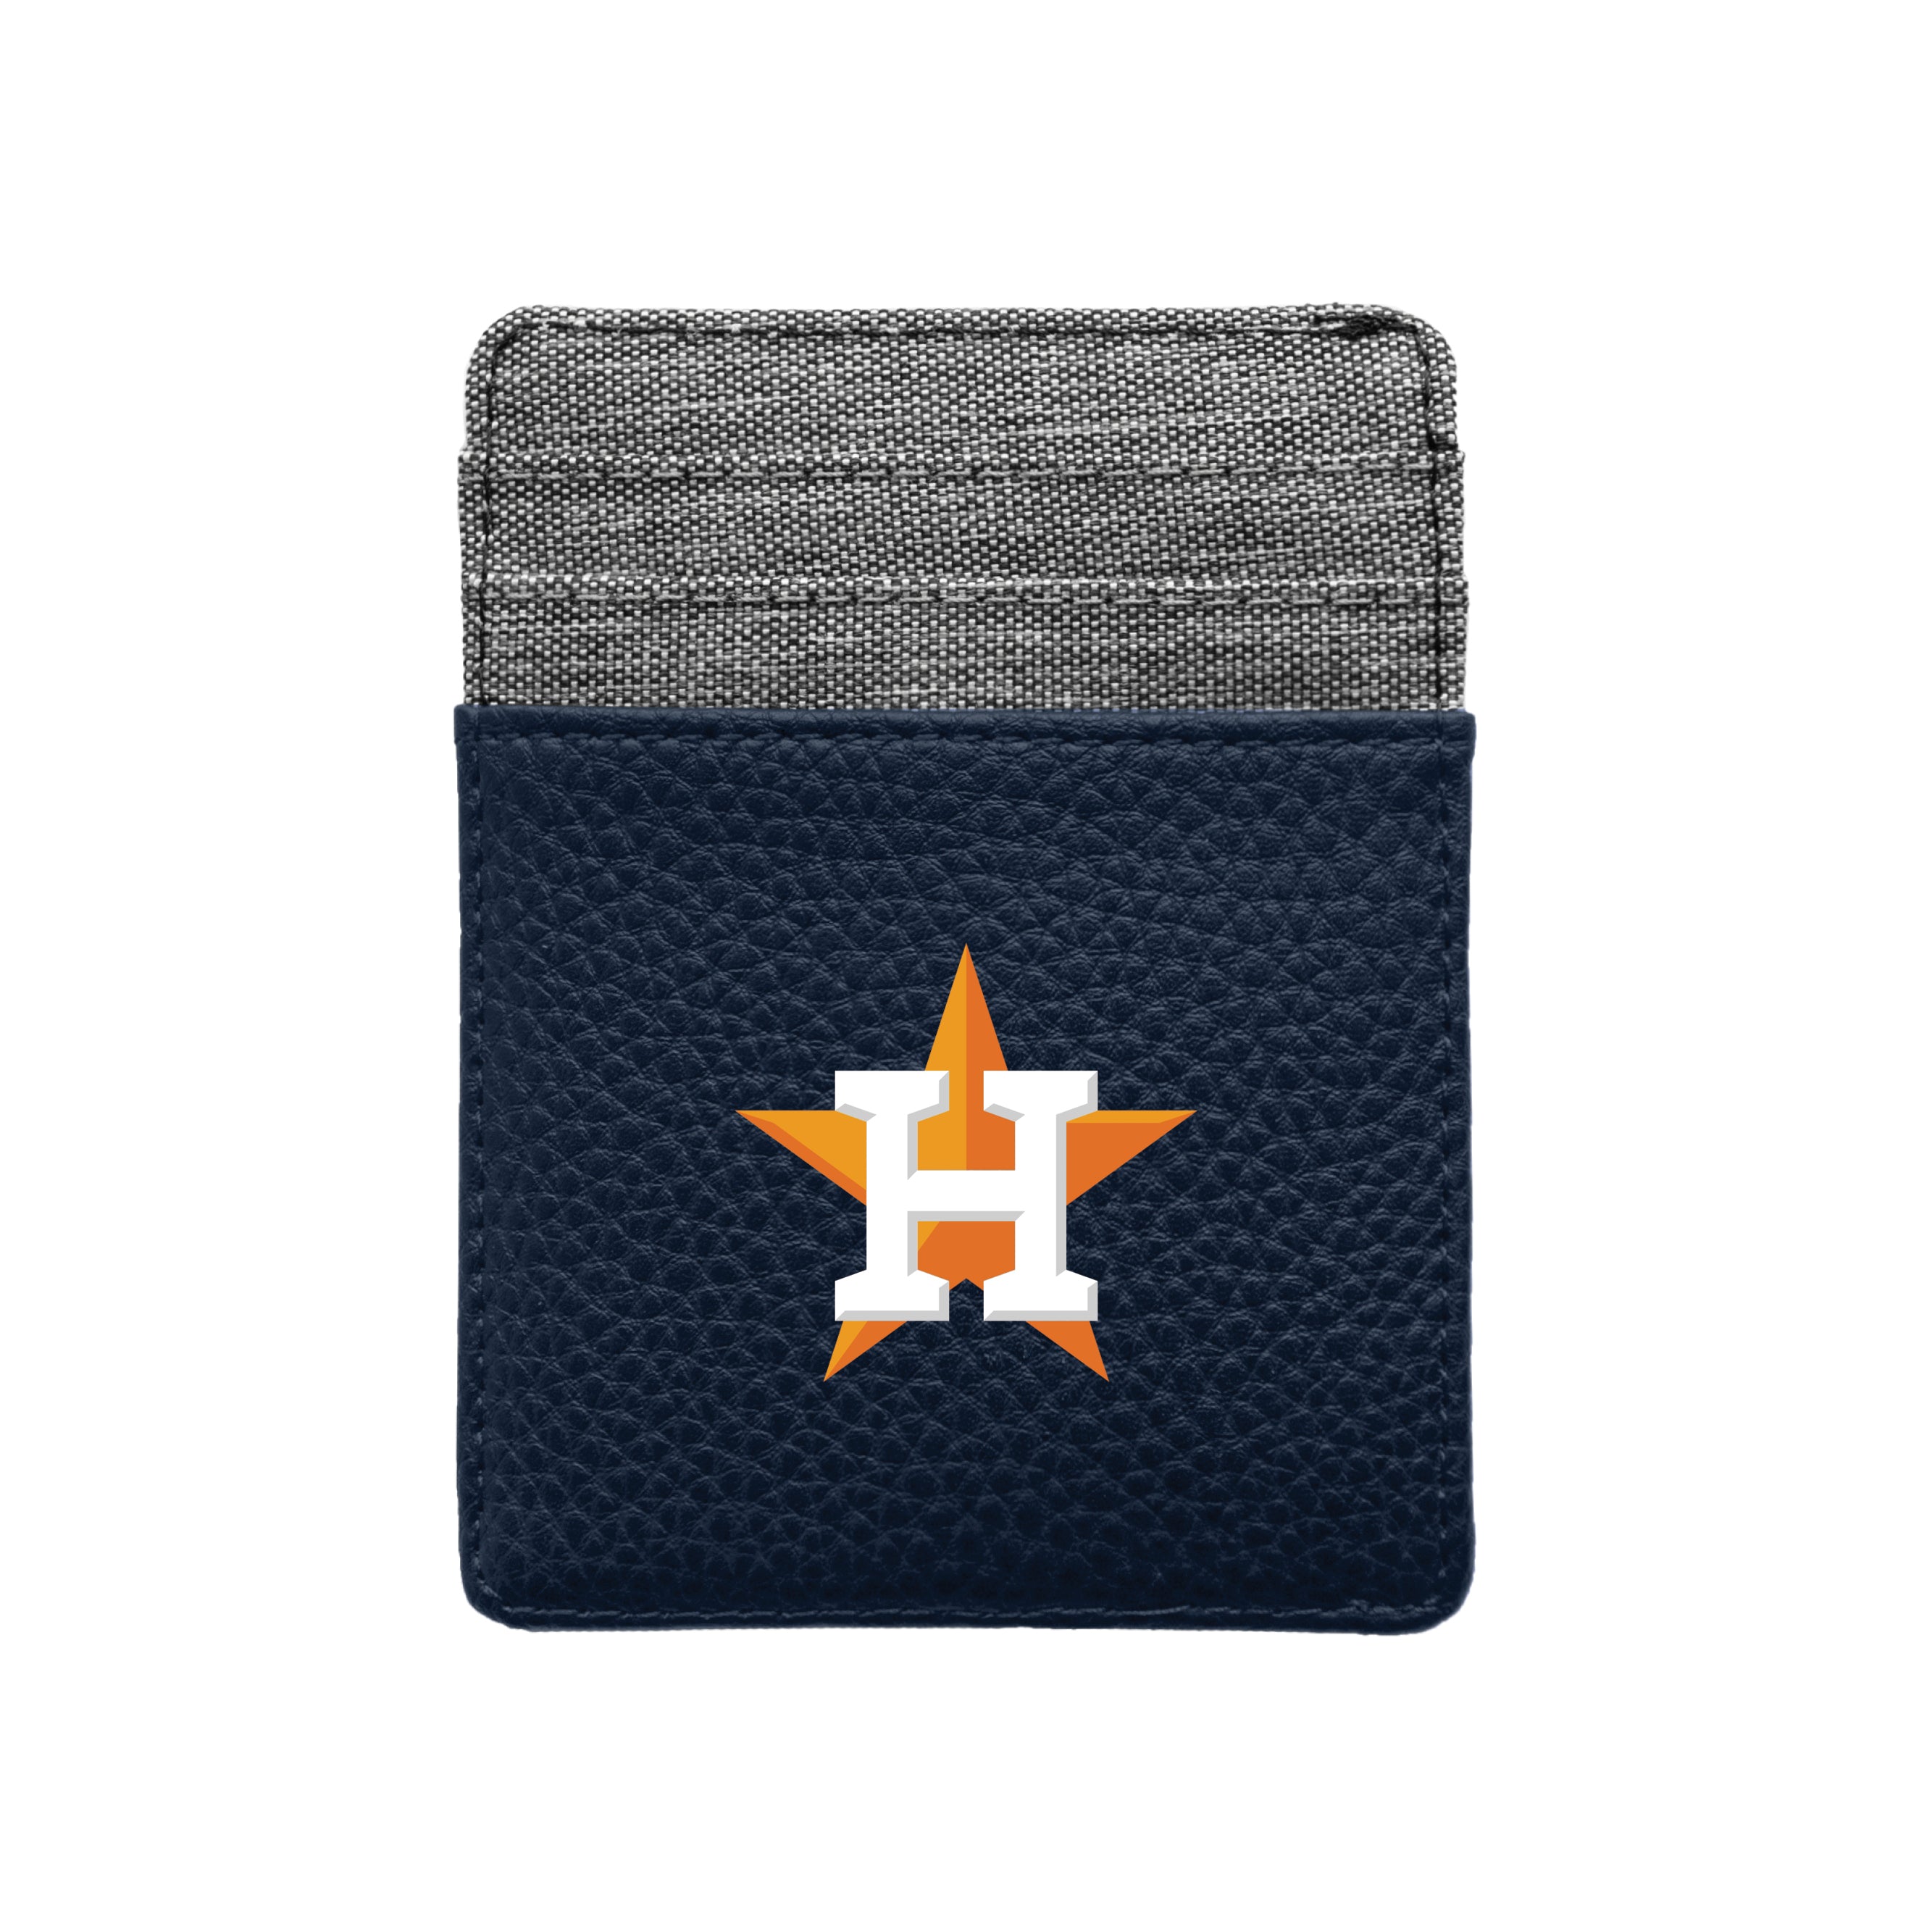 Officially Licensed MLB Zip Organizer Wallet - Houston Astros